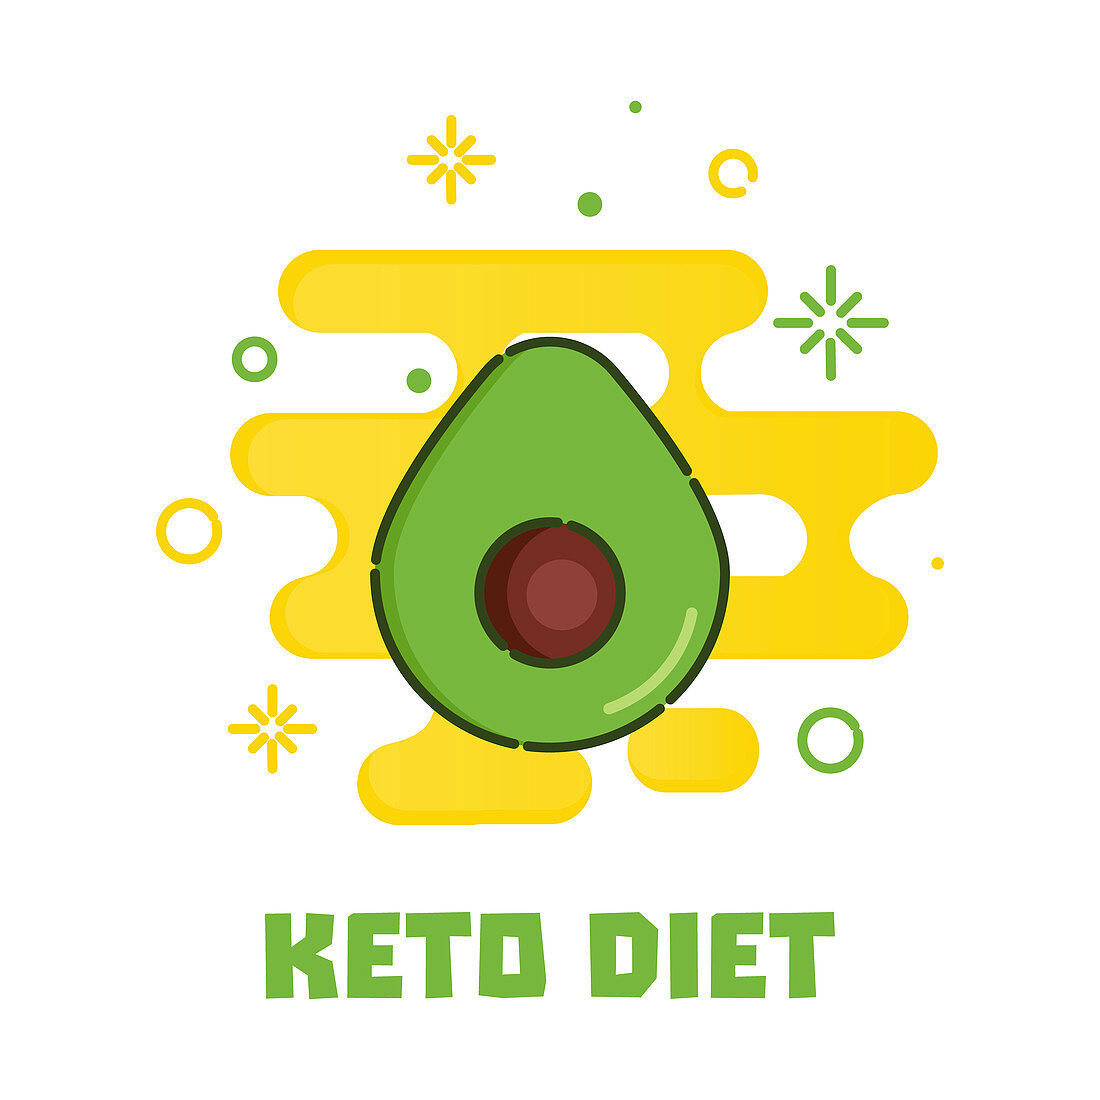 Keto diet, conceptual illustration